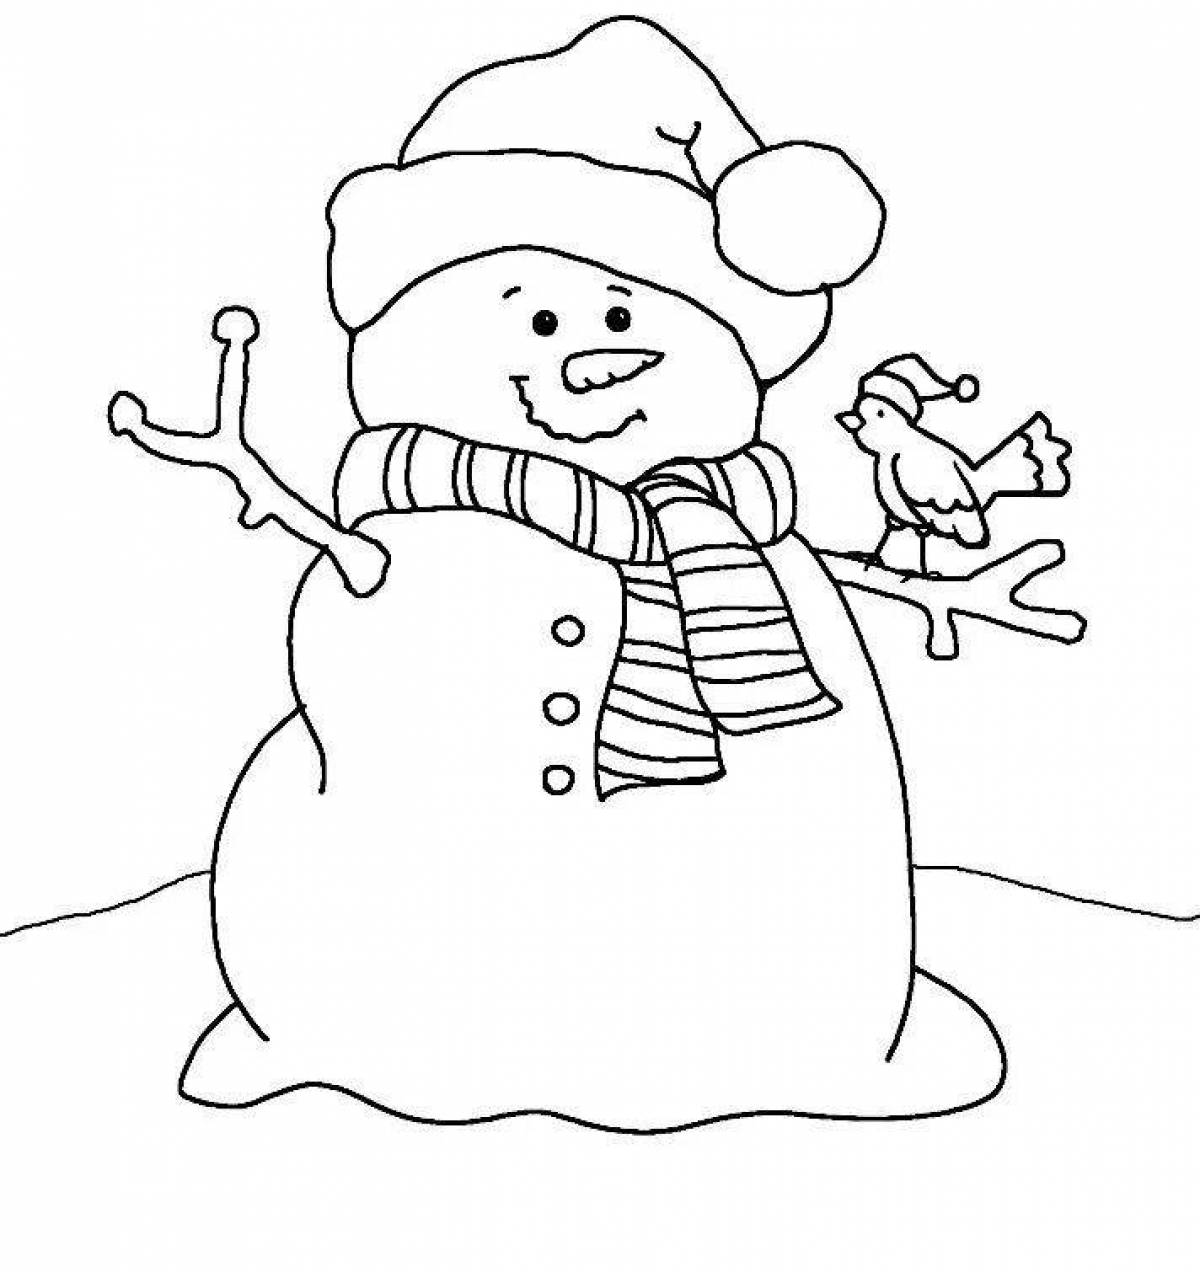 Adorable snowman coloring page